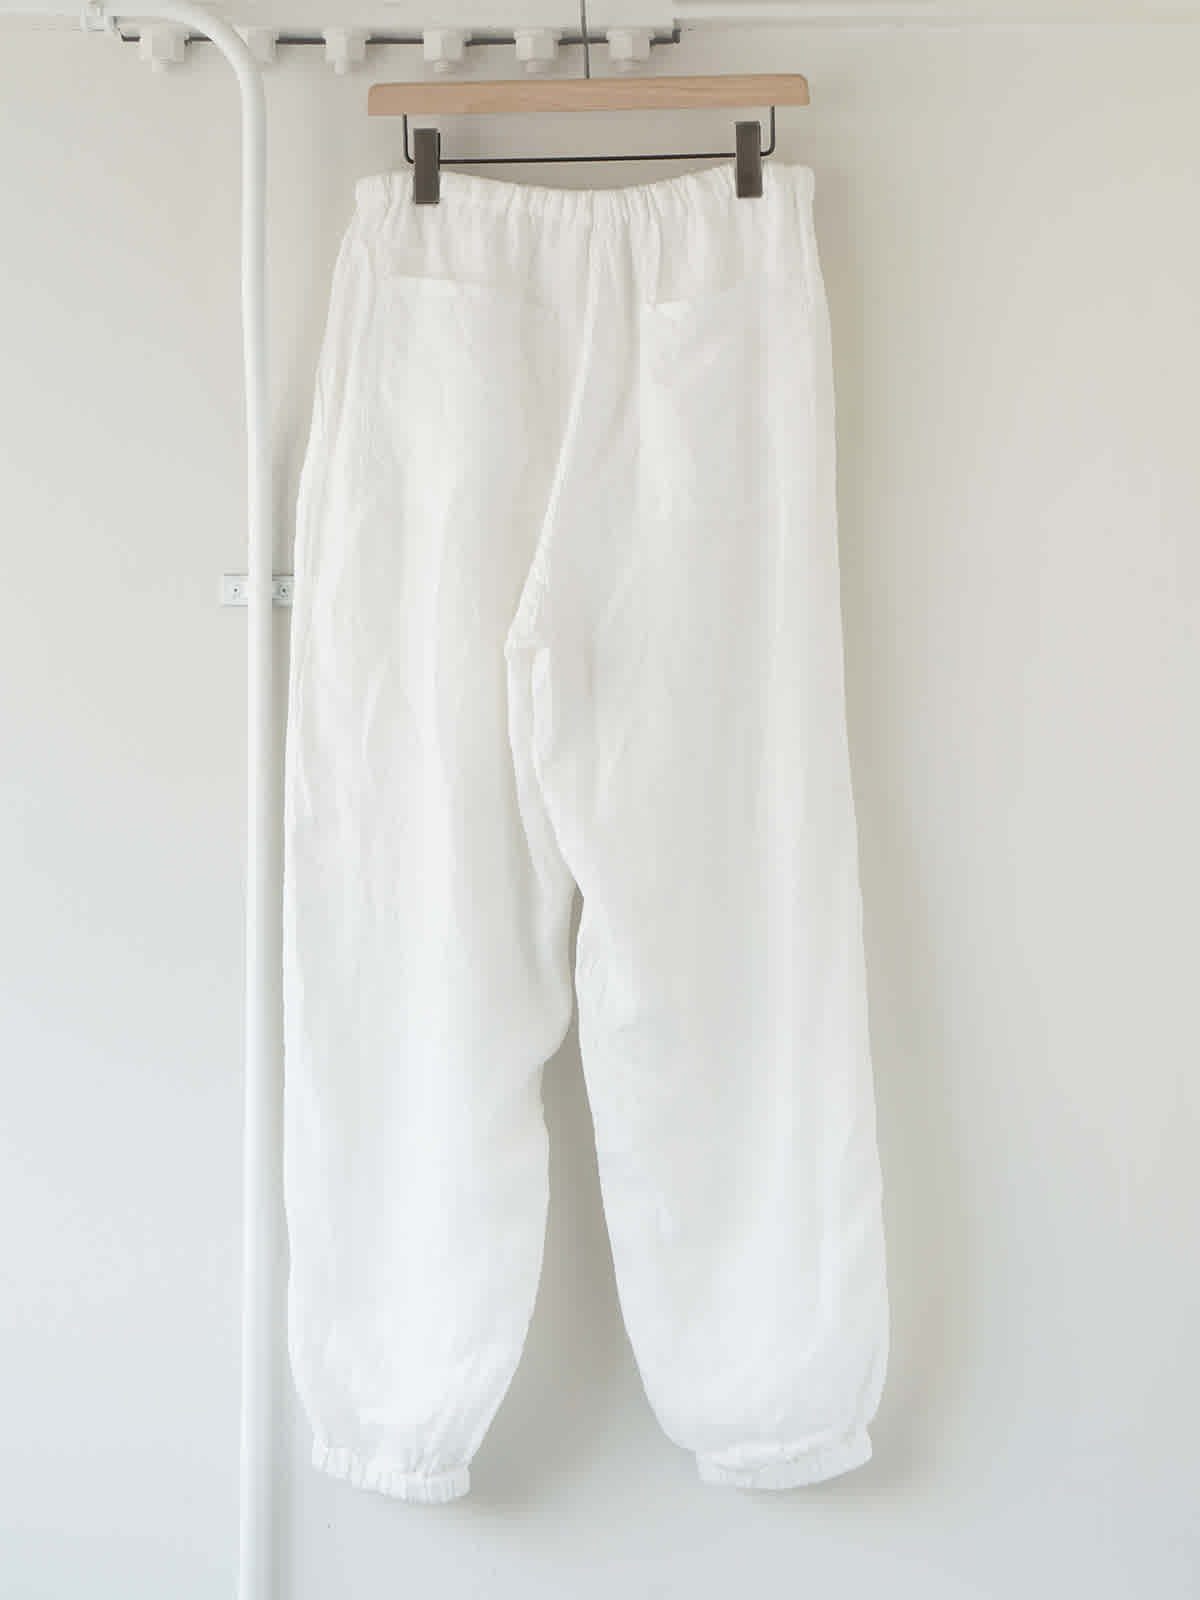 linen double cloth drawstring pants z4